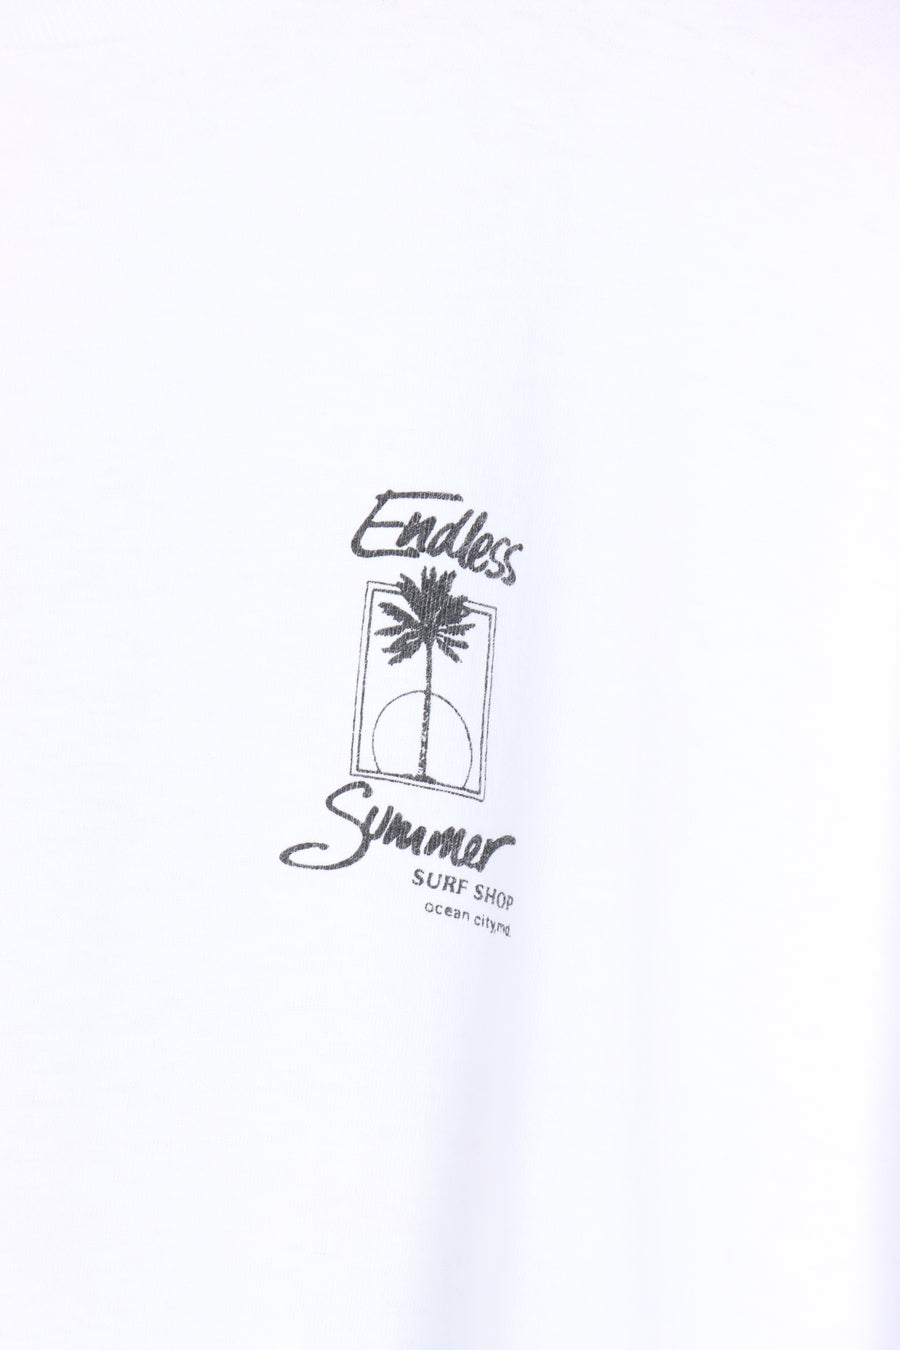 Endless Summer Surf Shop Ocean City Front Back Single Stitch Tee USA Made (XL)